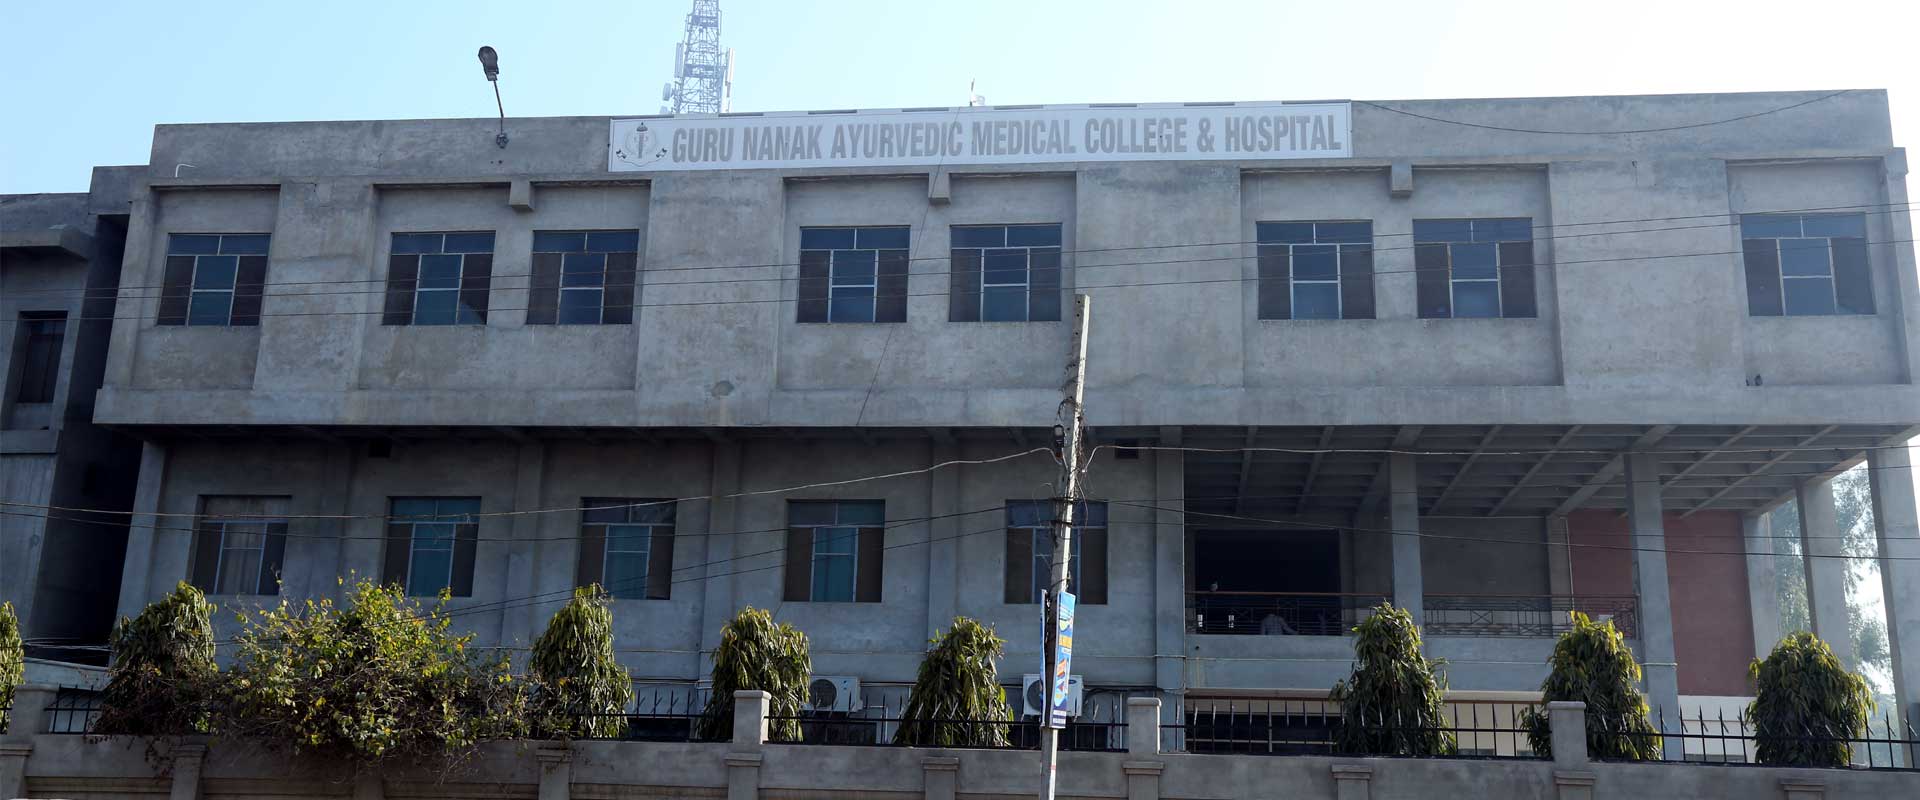 Guru Nanak Ayurvedic Medical College and Hospital, Muktsar